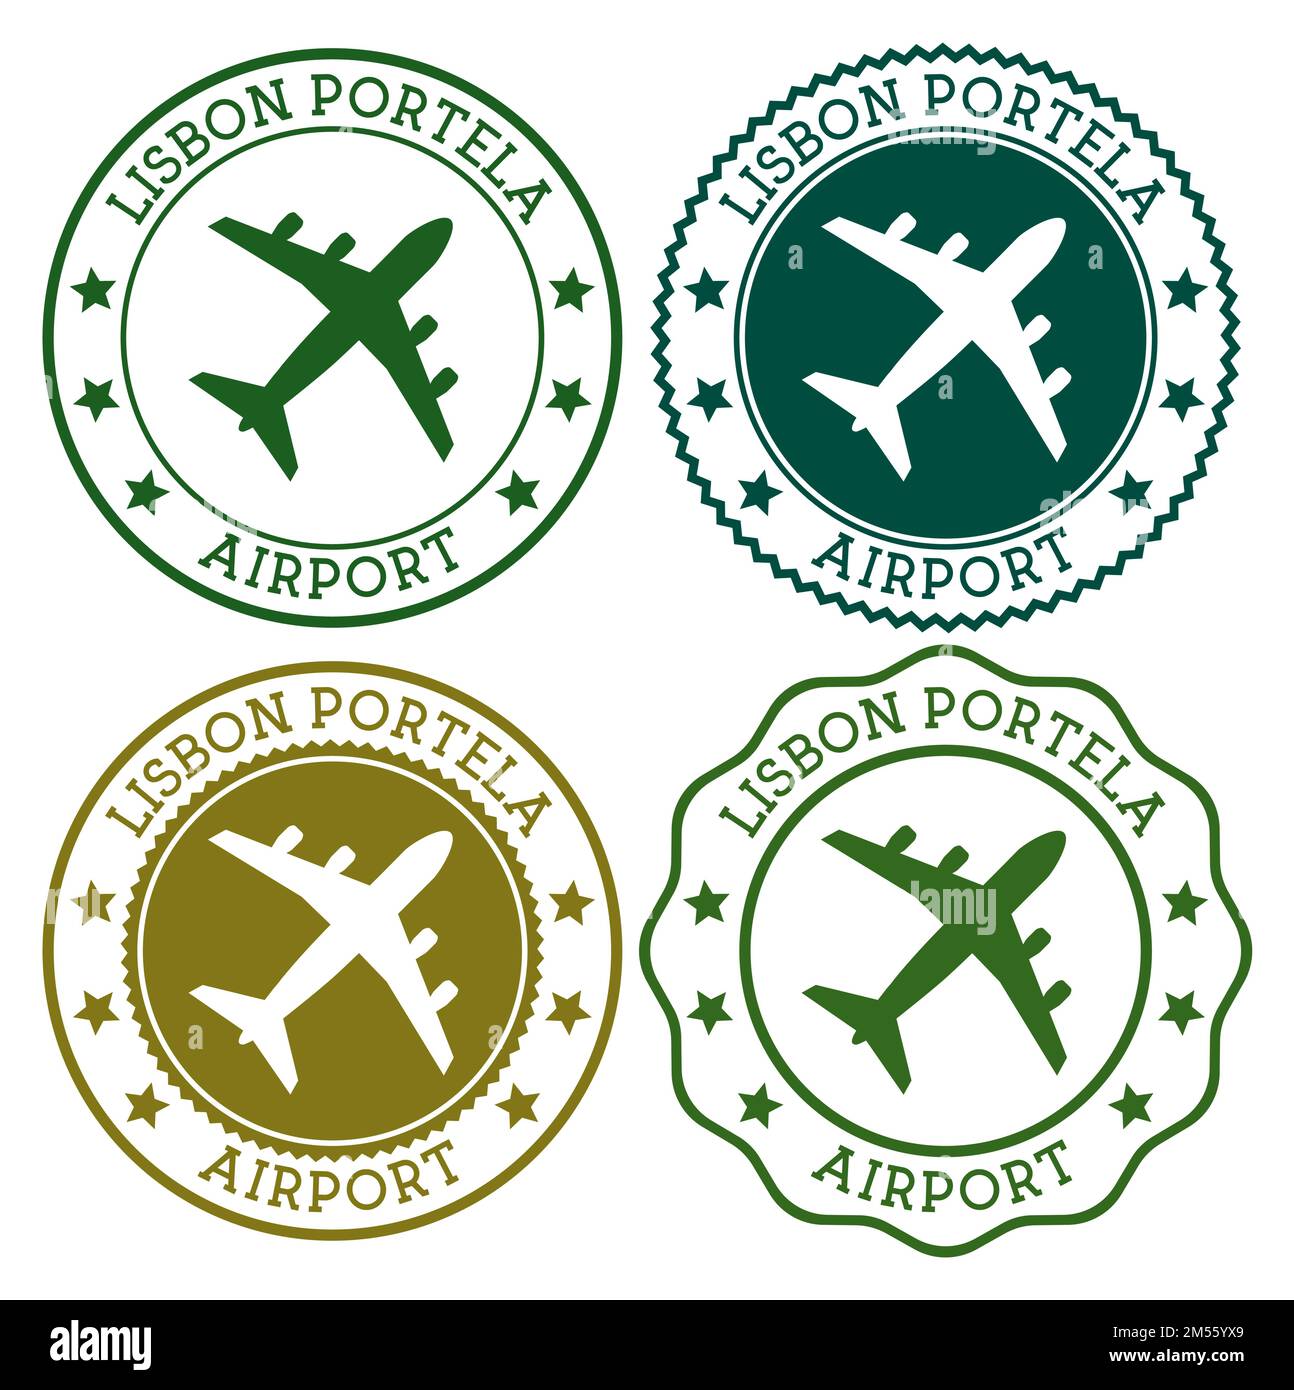 Flughafen Lissabon-Portela. Logo des Lissabonner Flughafens. Flache Stempel in der Materialfarbpalette. Vektordarstellung. Stock Vektor